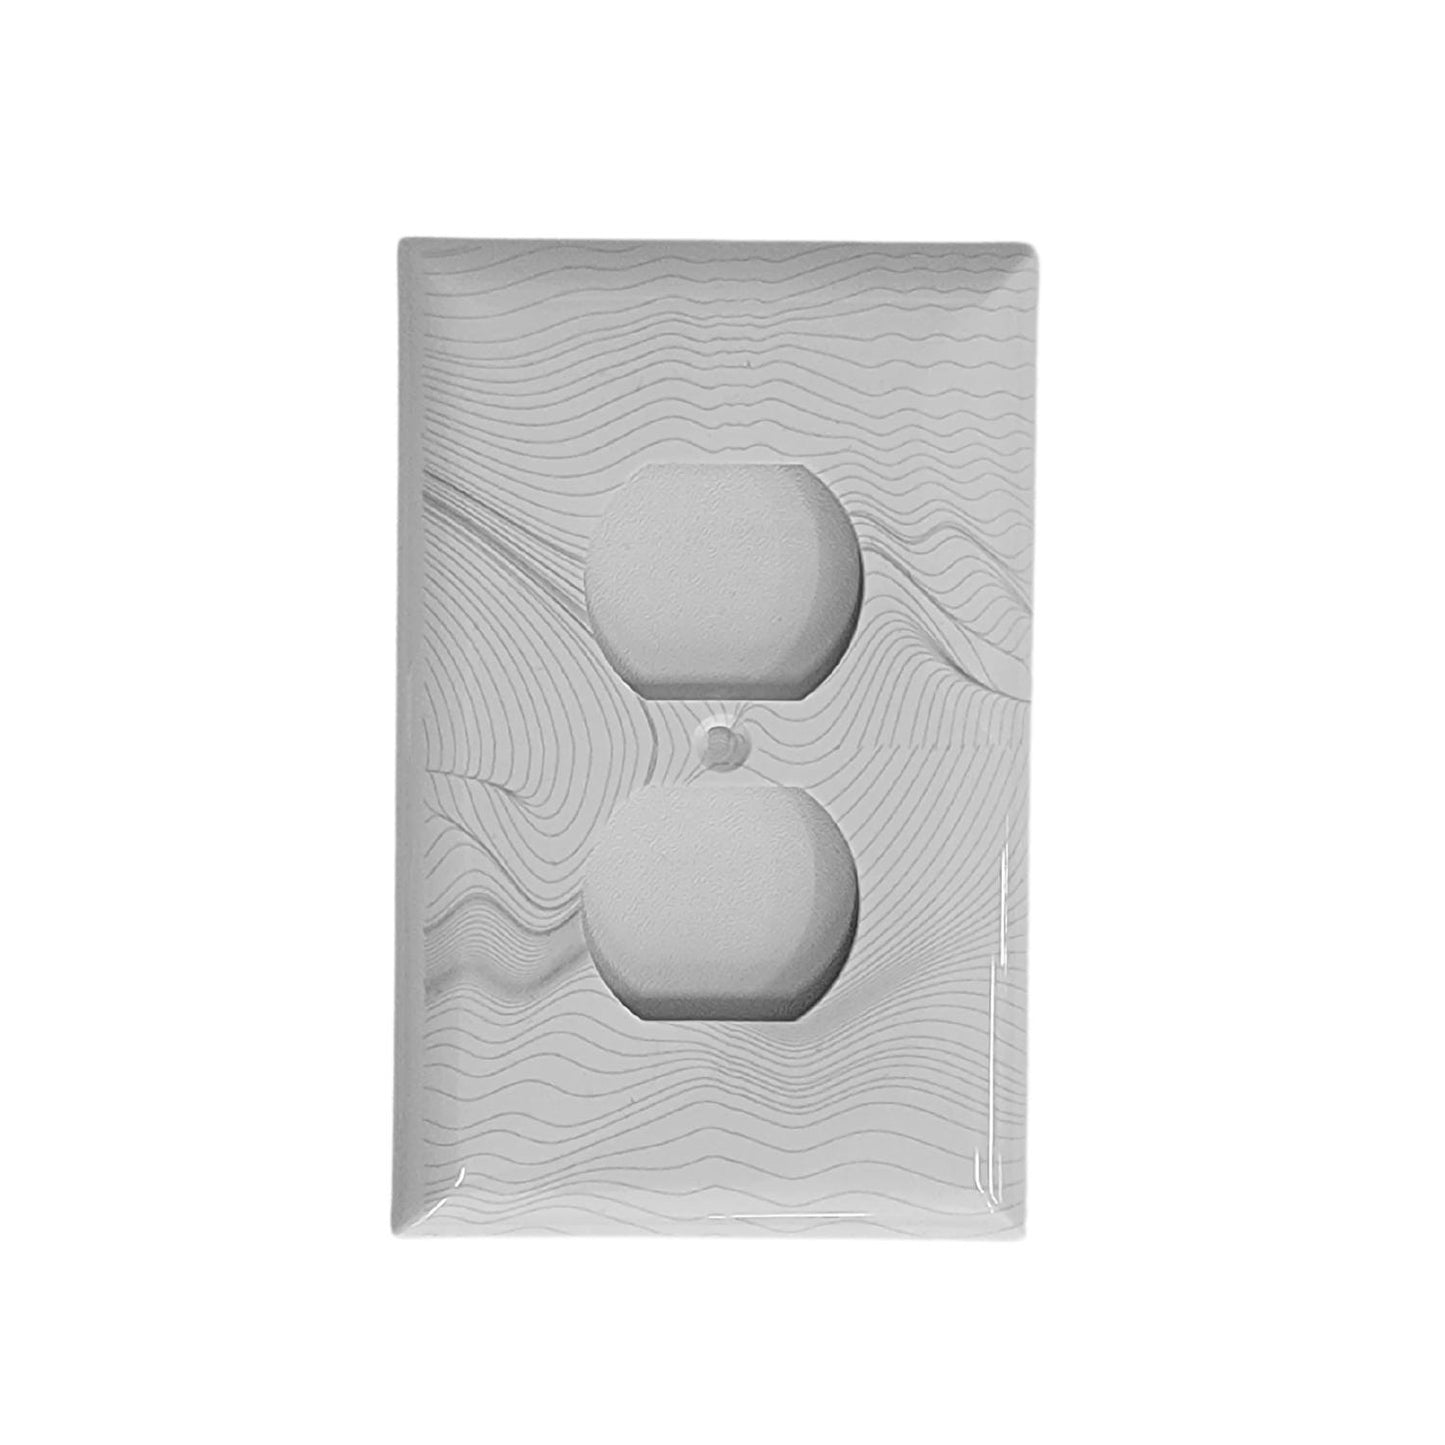 Geometric Design Single Duplex Outlet Cover Wall Plate White LA144-PWP6